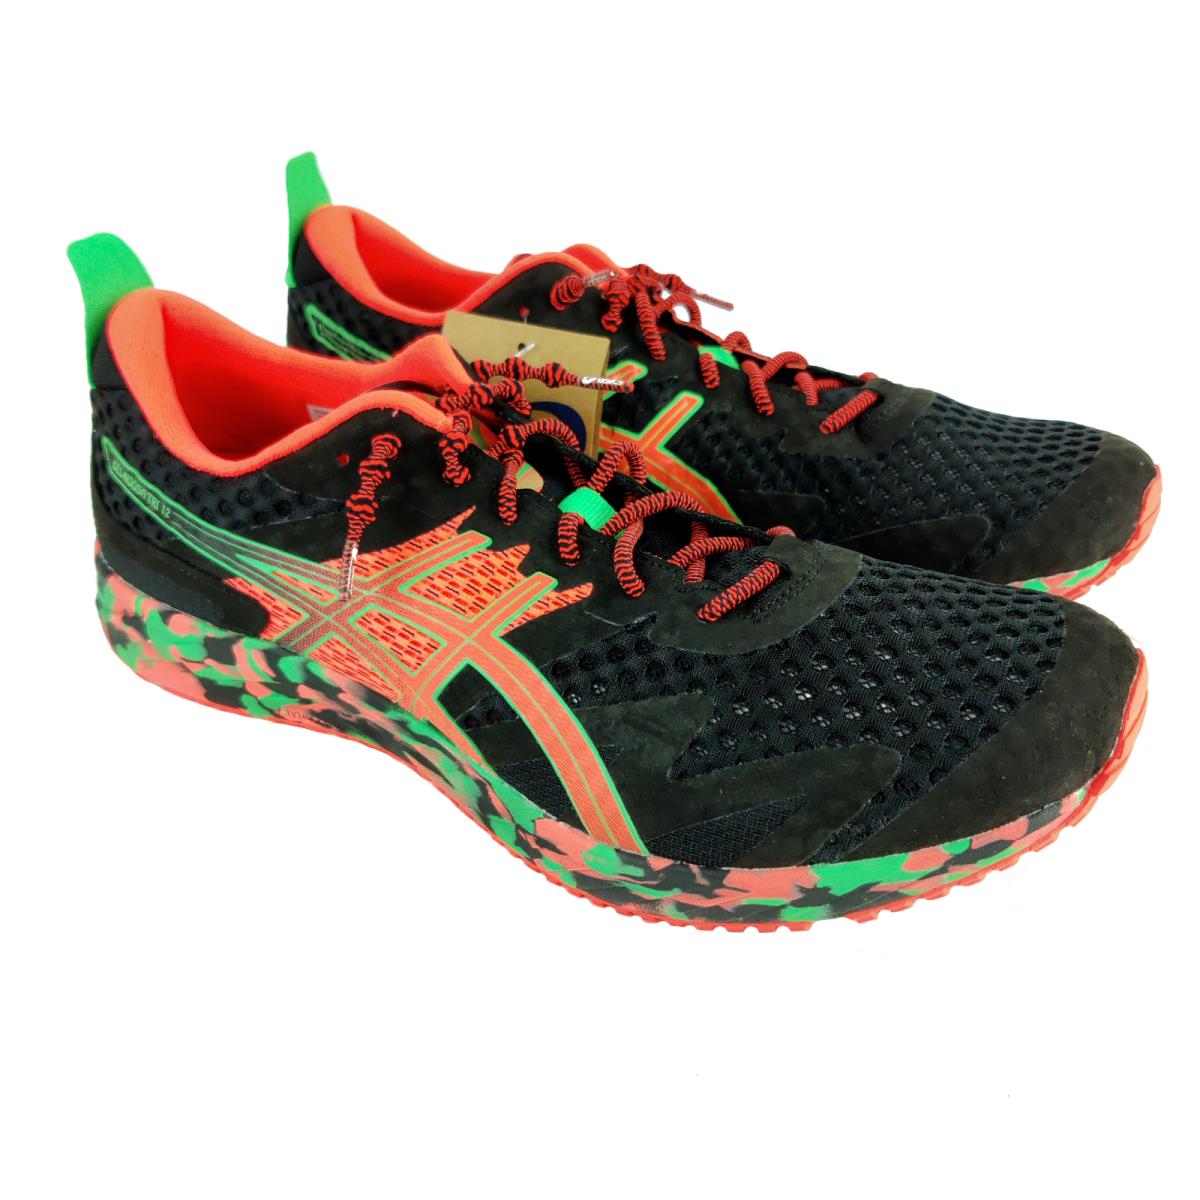 Asics Gel-noosa Tri 12 Running Shoes Black Pink Flash Coral Mens Size 11 - Black